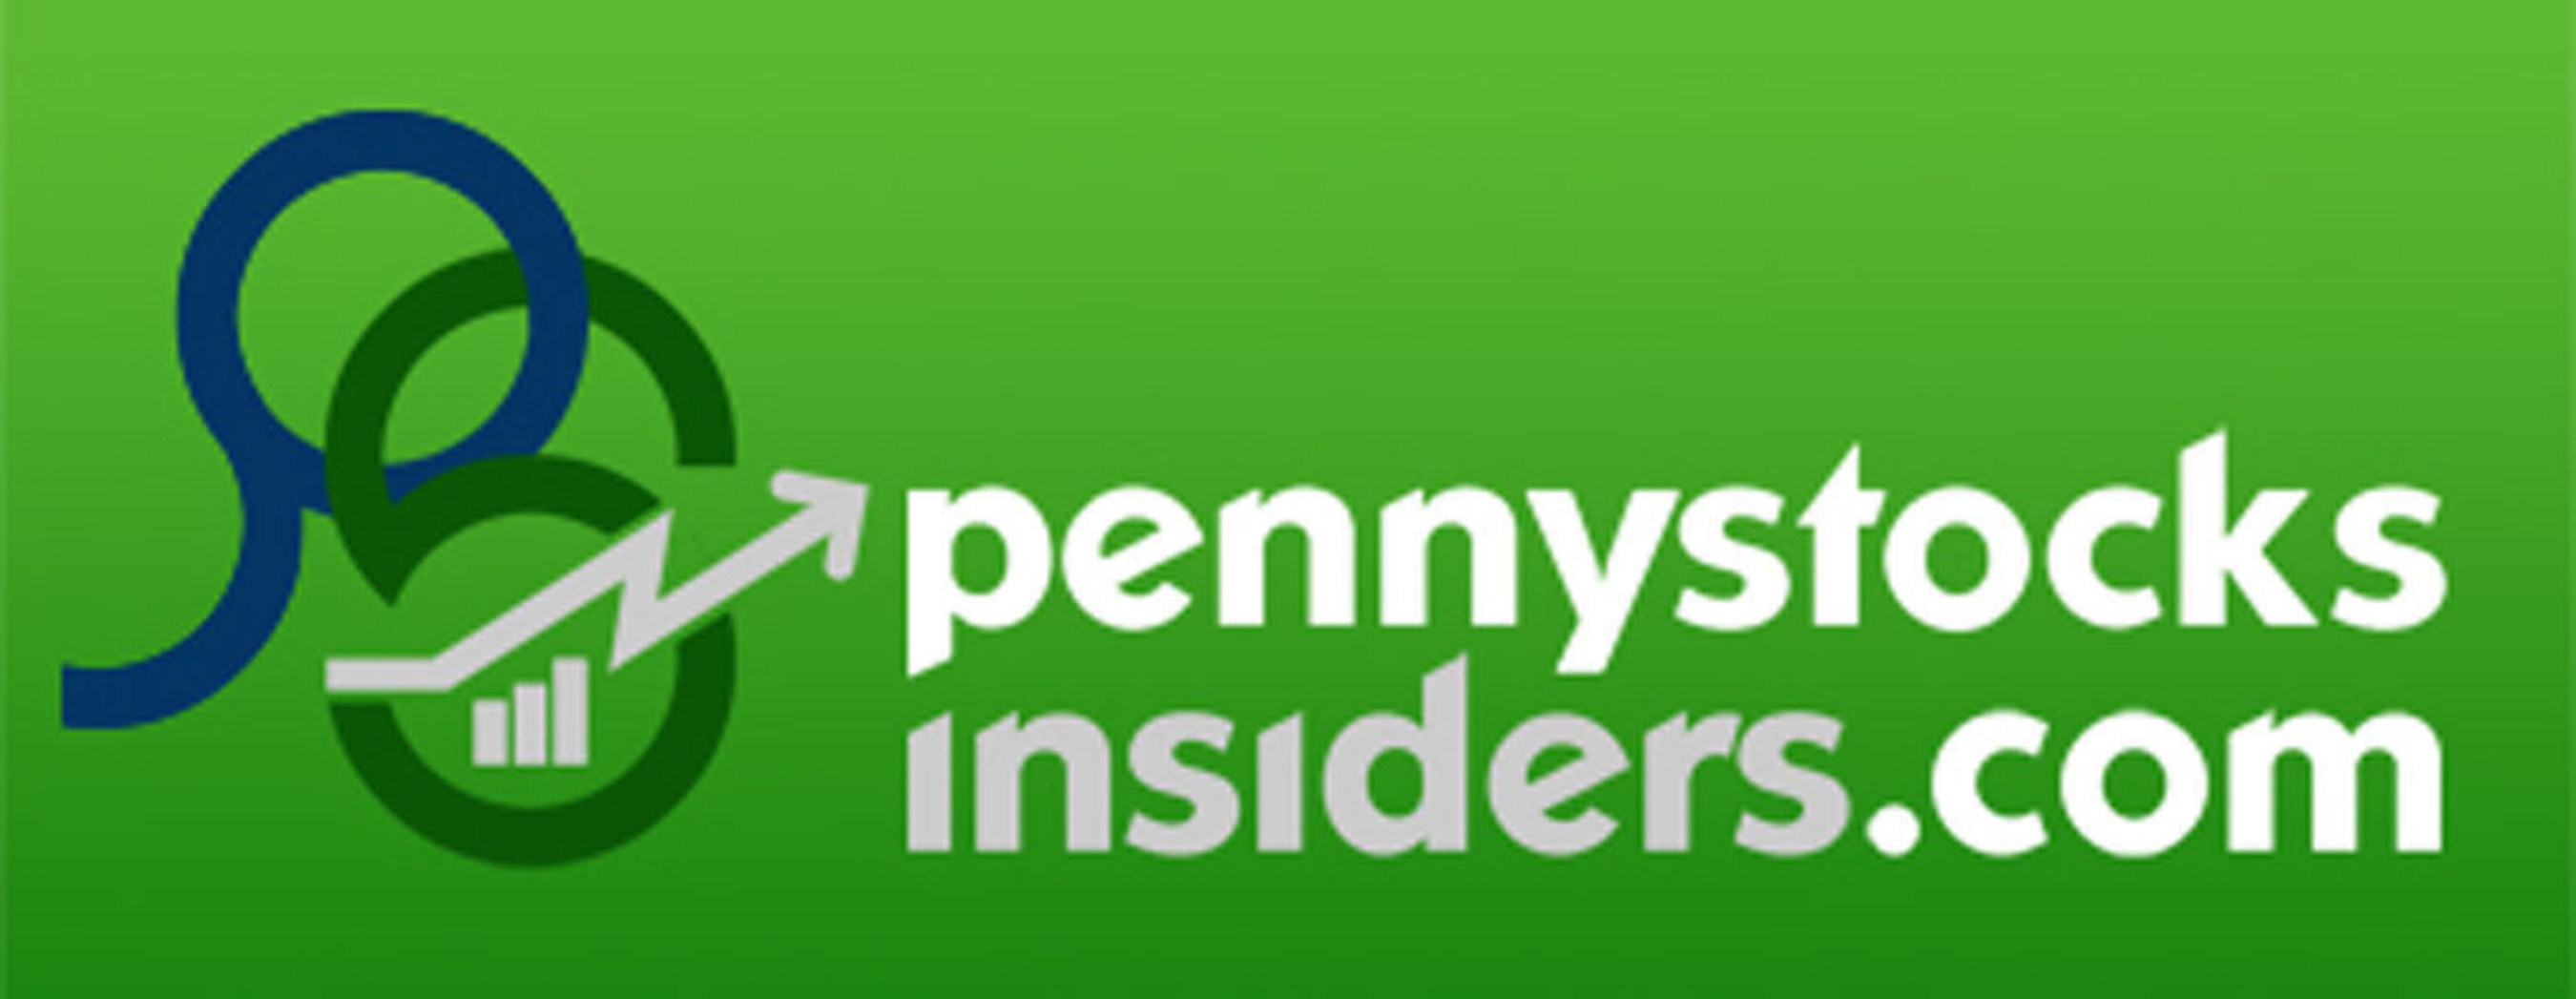 Pennystockinsiders Logo